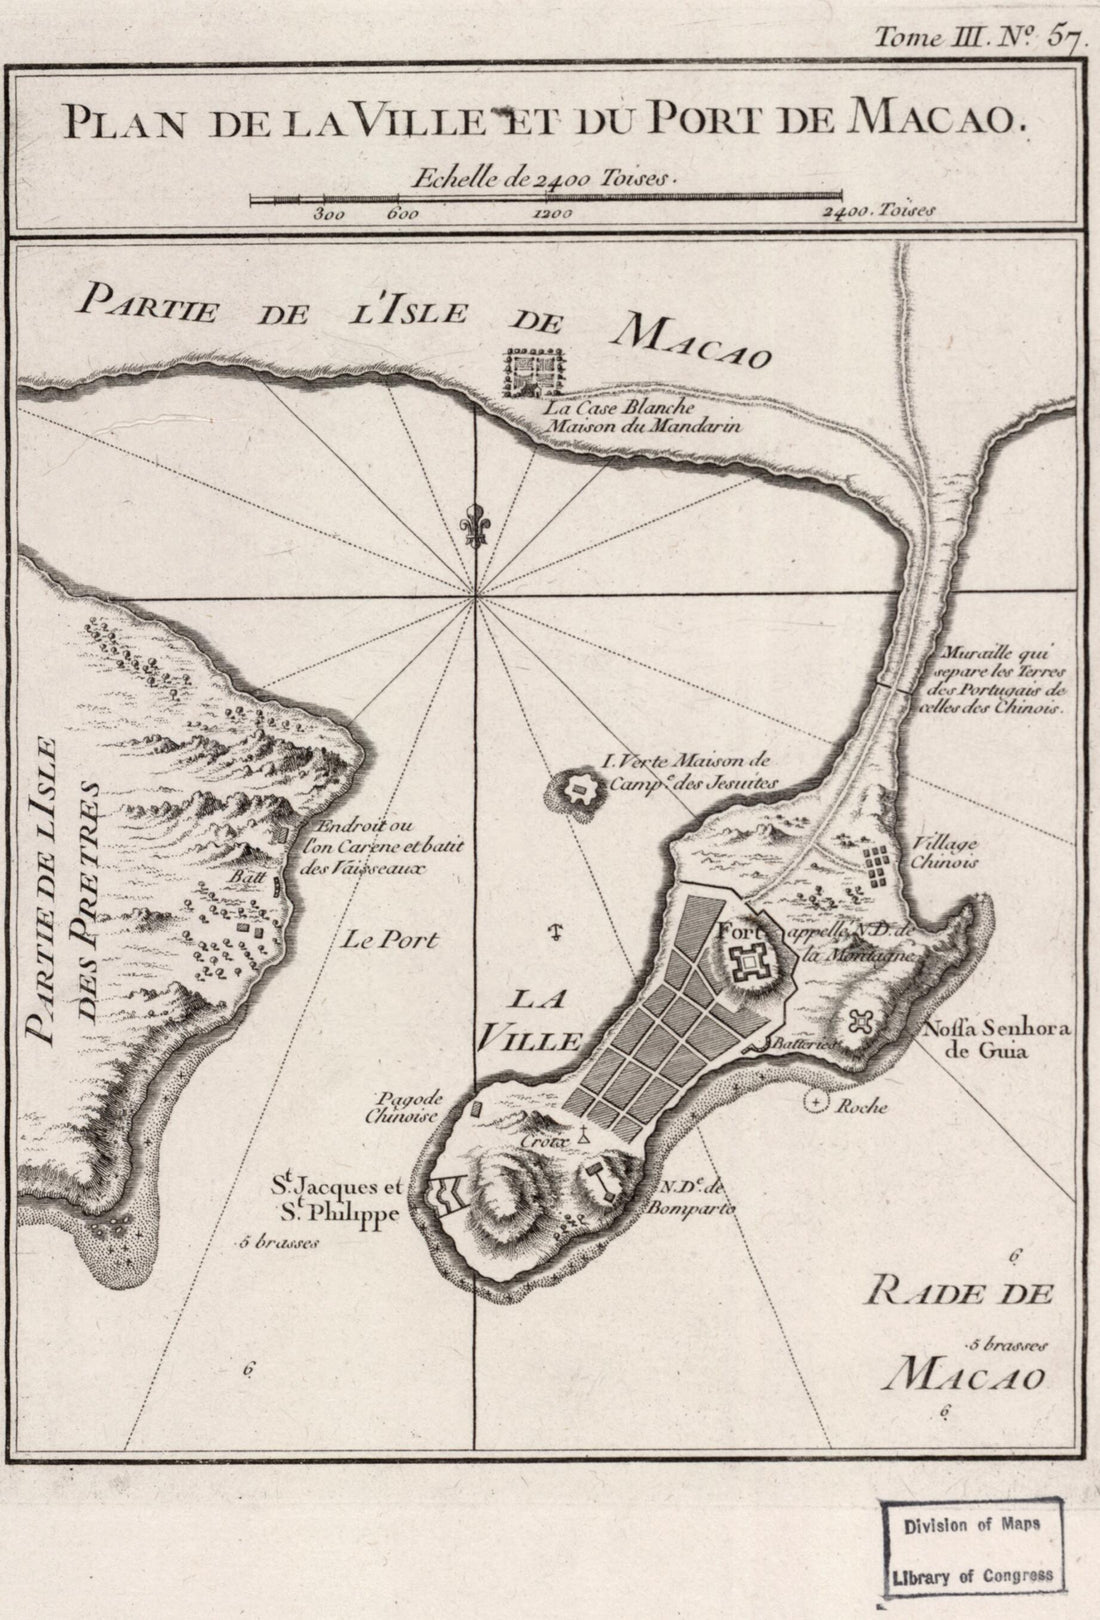 This old map of Plan De La Ville Et Du Port De Macao from 1764 was created by Jacques Nicolas Bellin in 1764